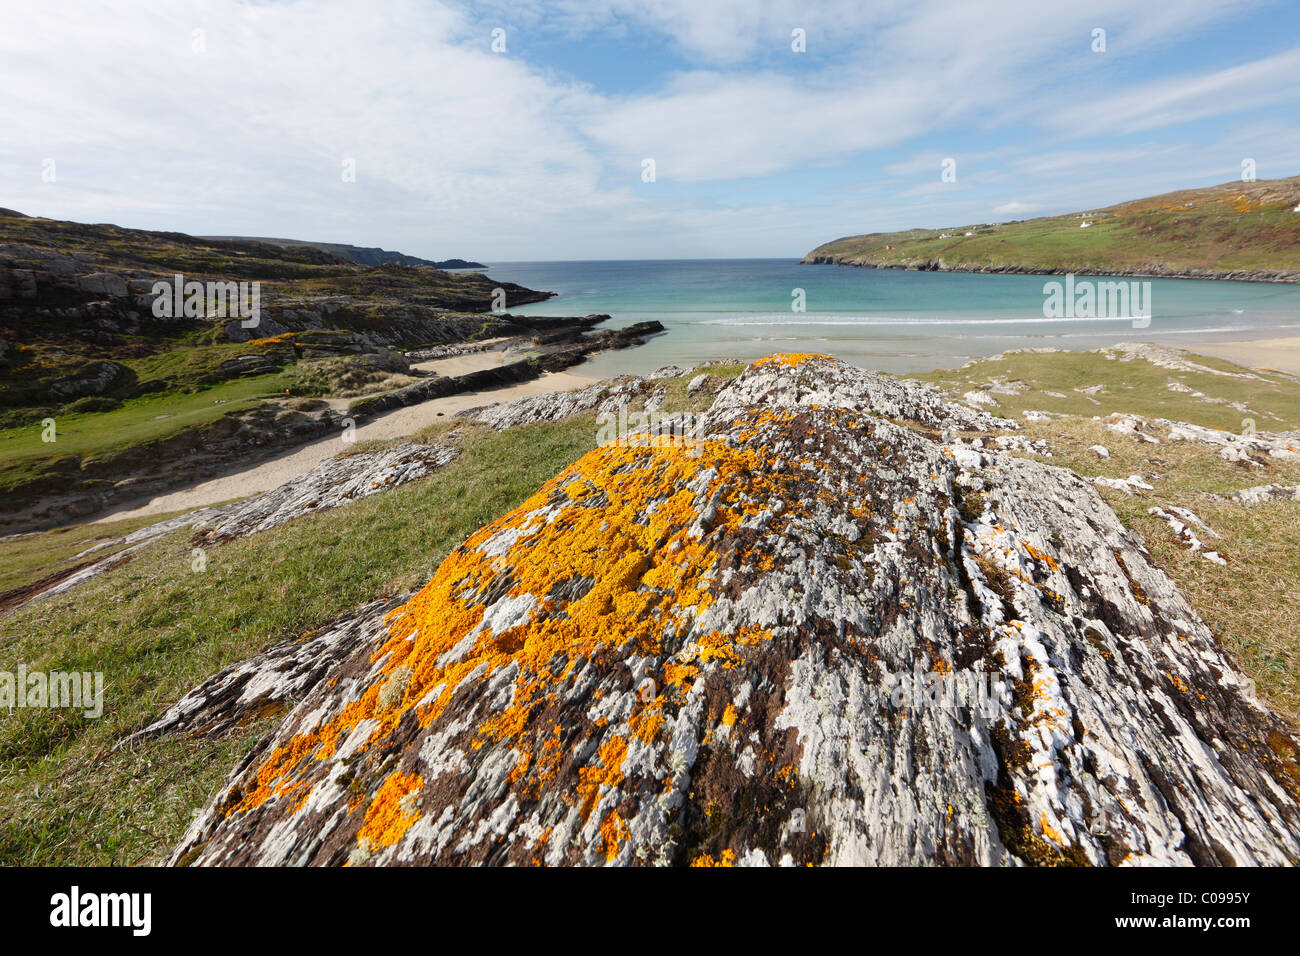 Rock with lichens, Barley Cove, Mizen Head Peninsula, West Cork, Republic of Ireland, British Isles, Europe Stock Photo